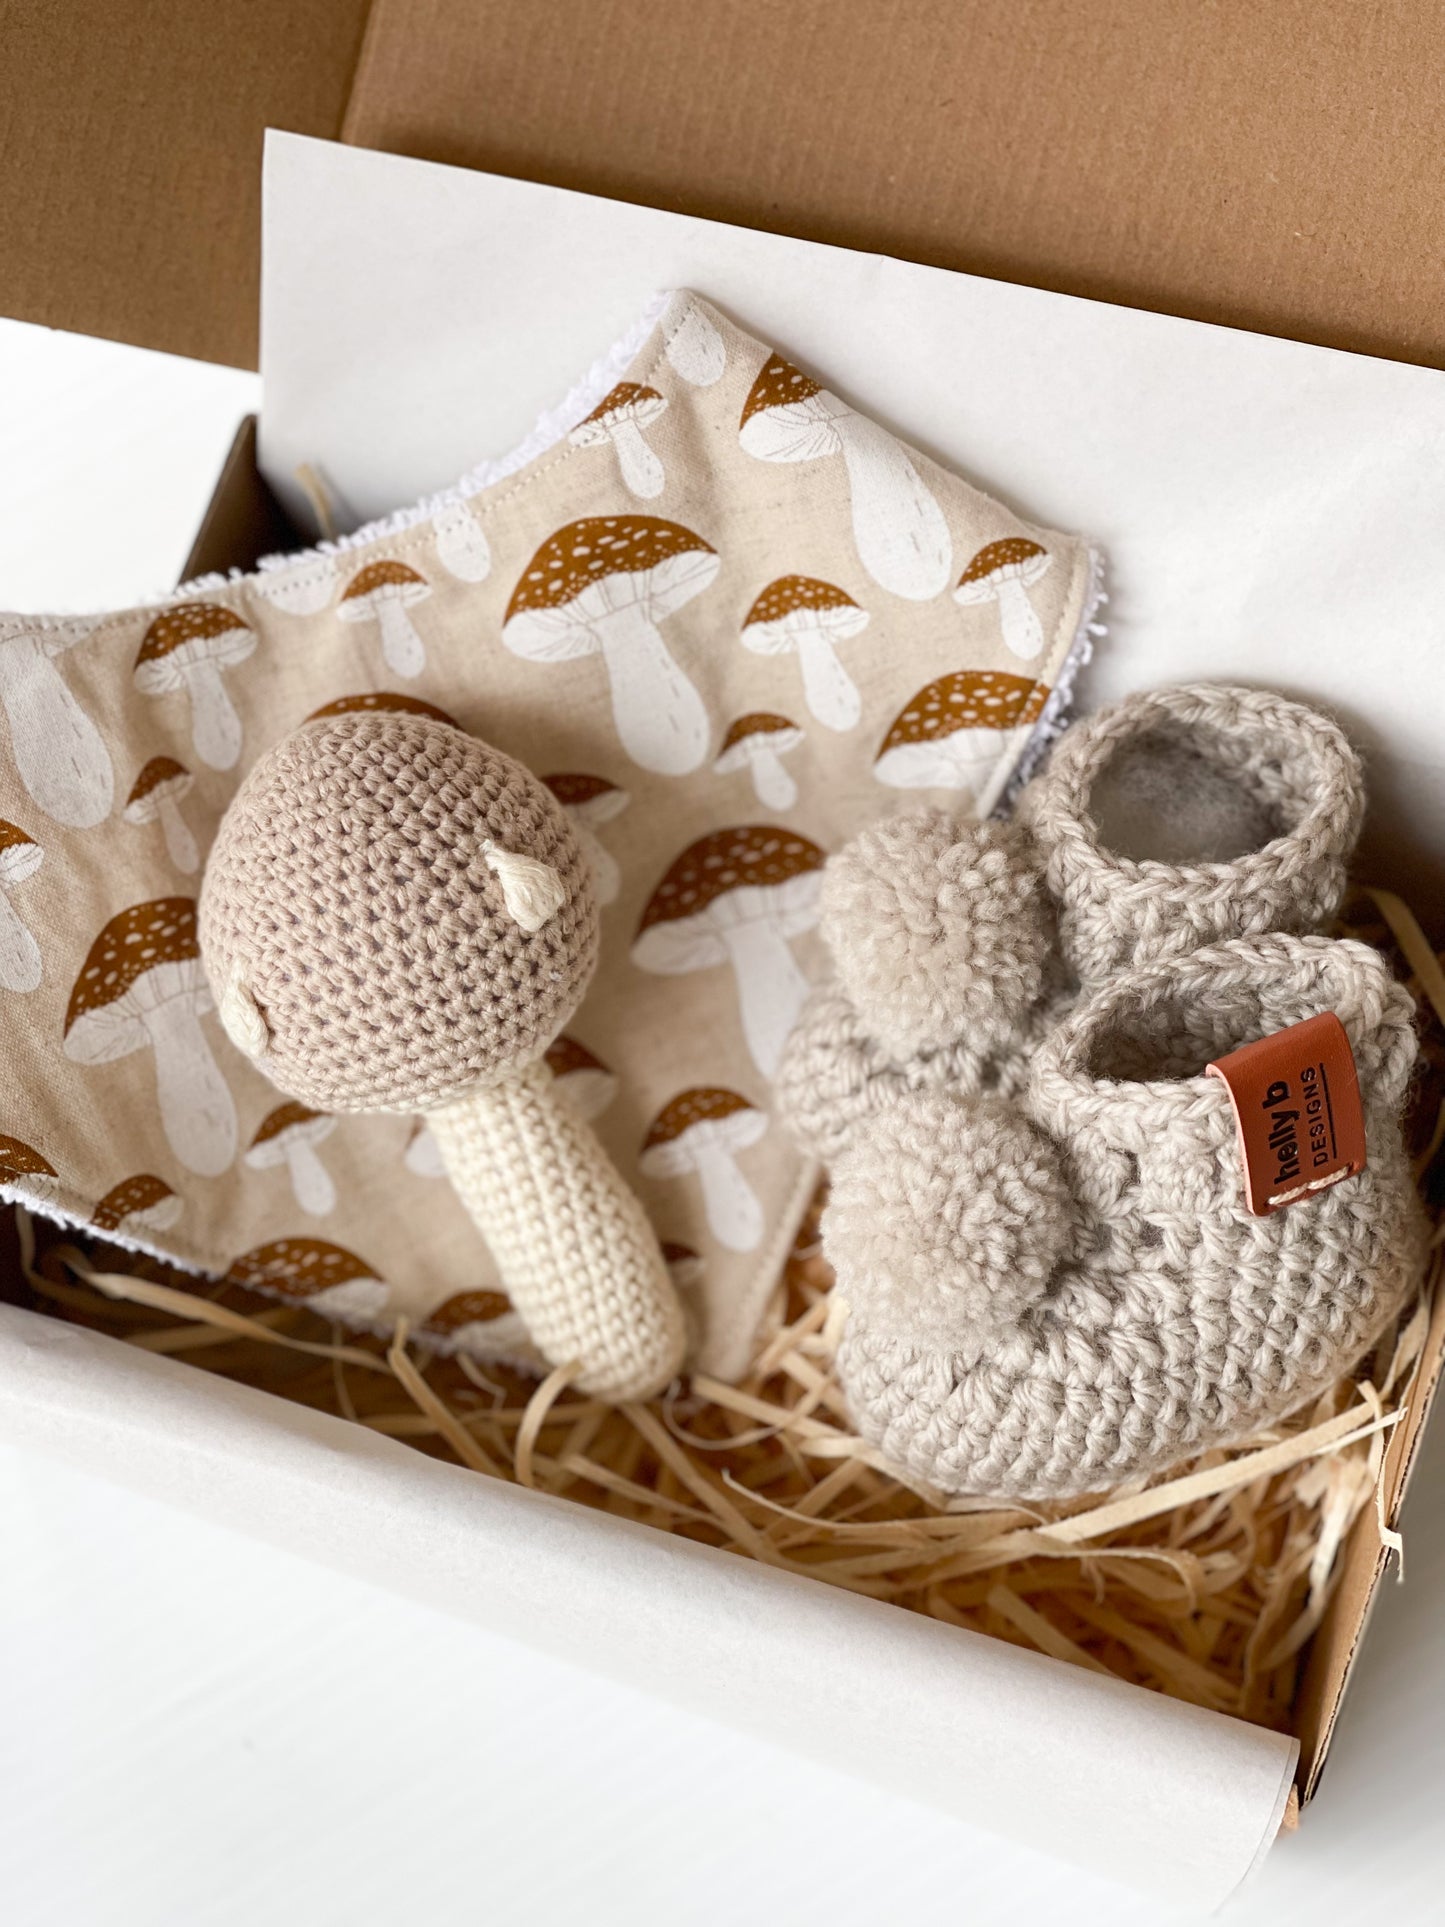 Welcome Home Newborn Gift Box